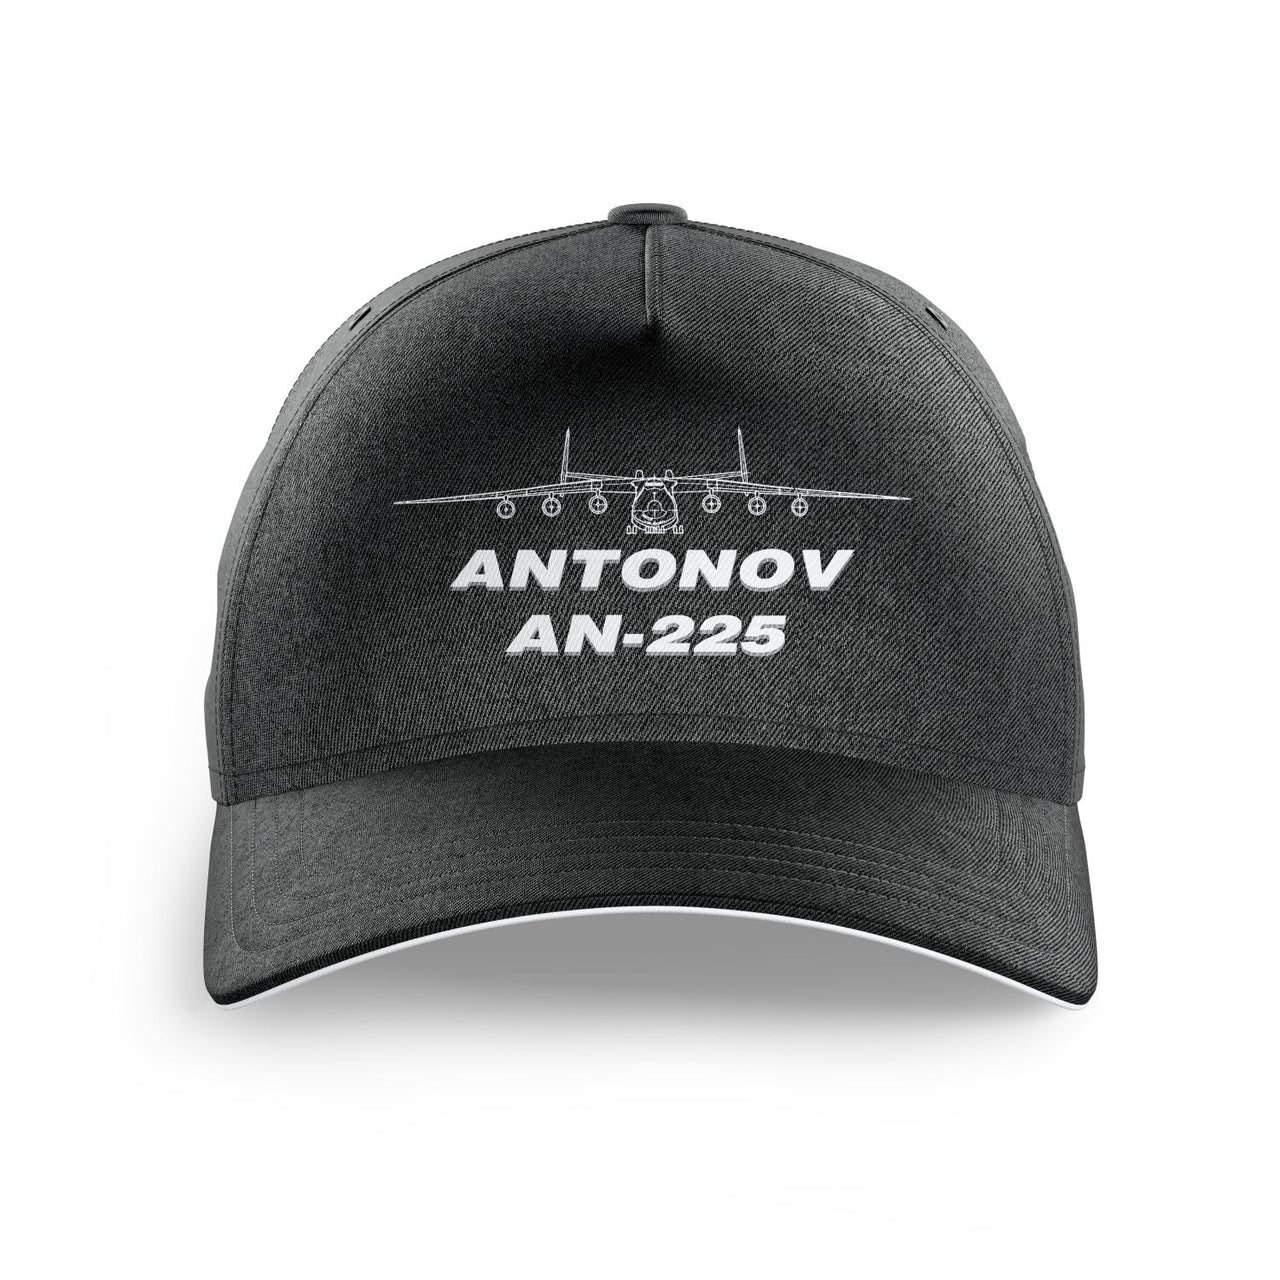 Antonov AN-225 (26) Printed Hats